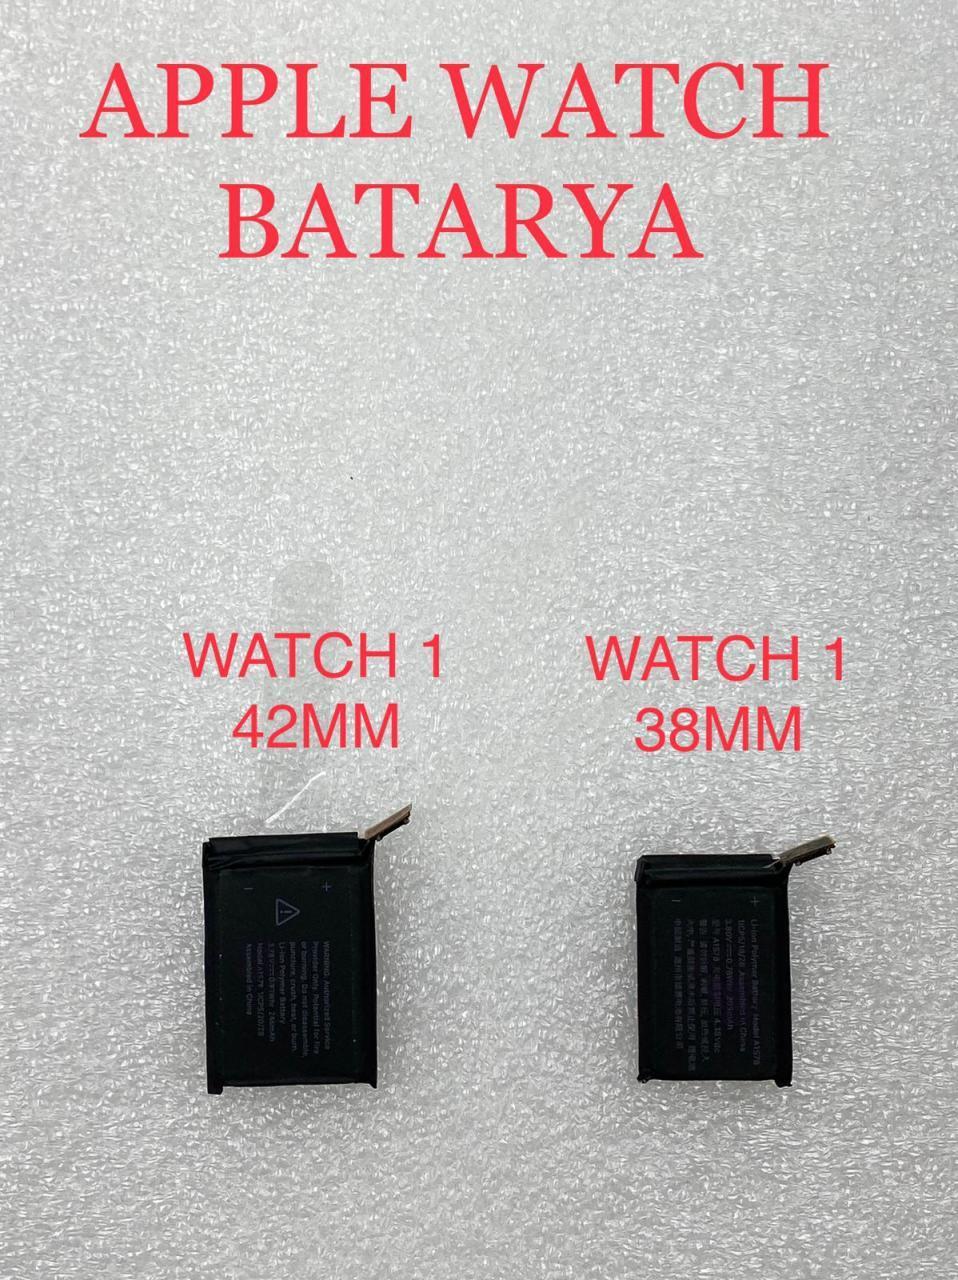 Watch S4 40Mm Batarya